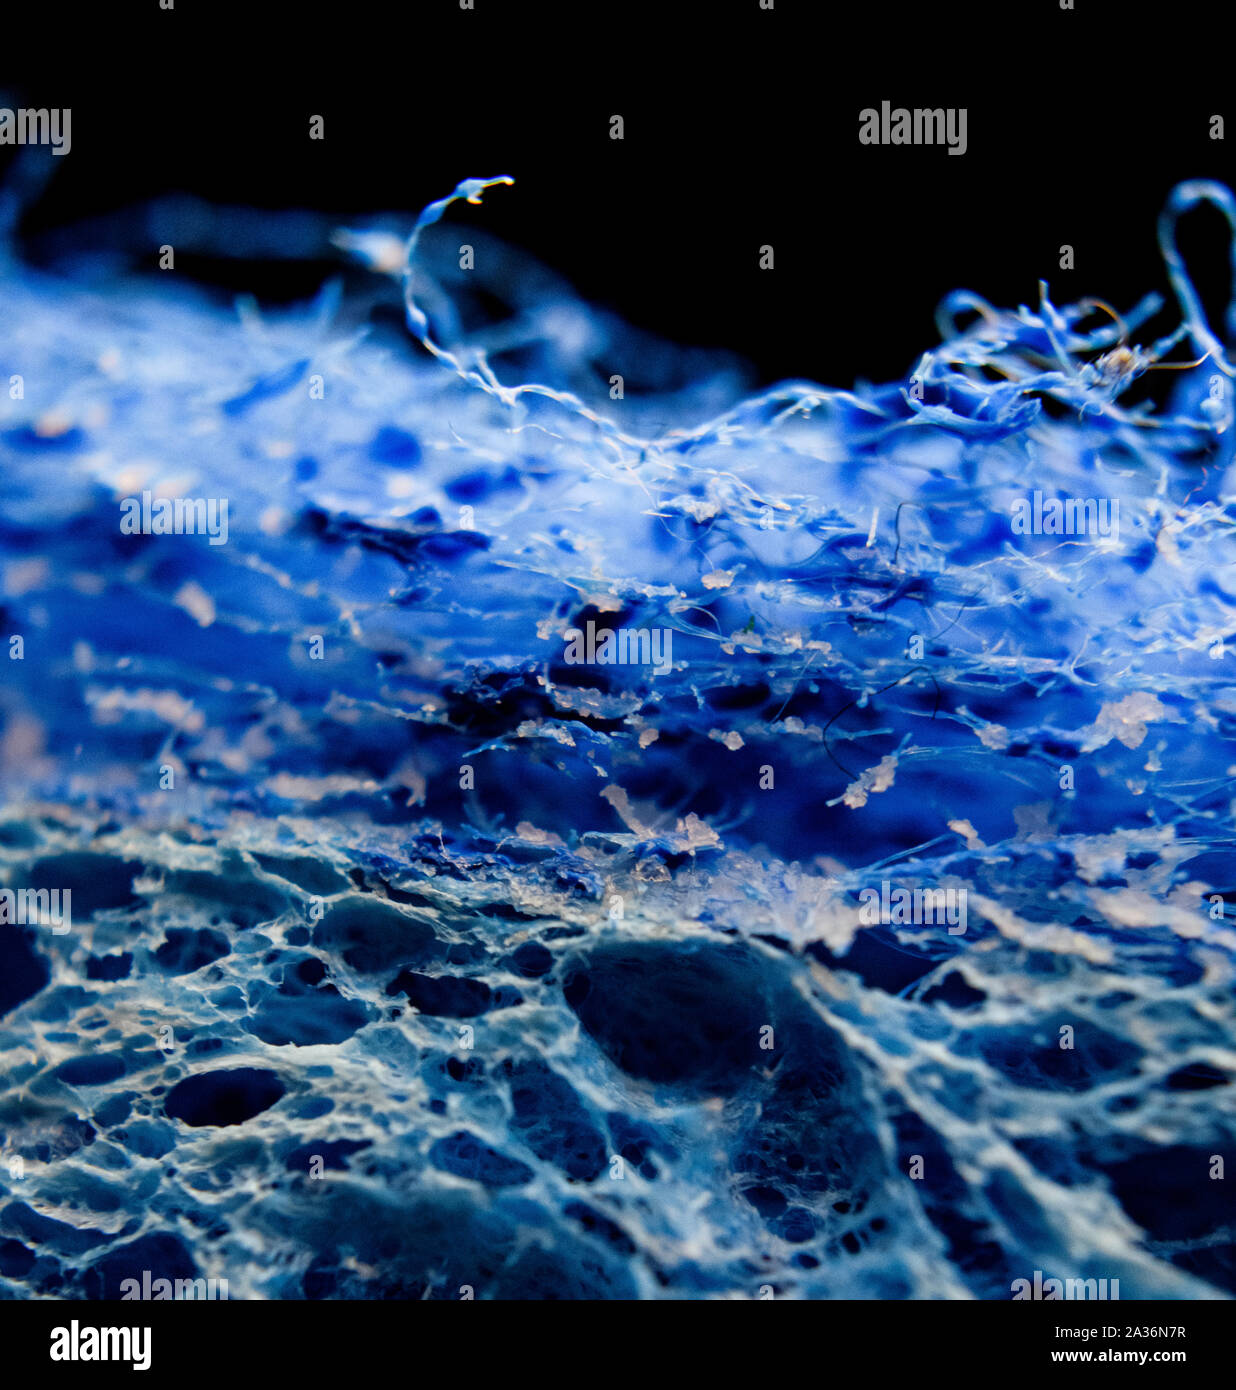 Closeup of Fibrous Textured Blue Scrub Sponge Isolated on Black Background Stock Photo